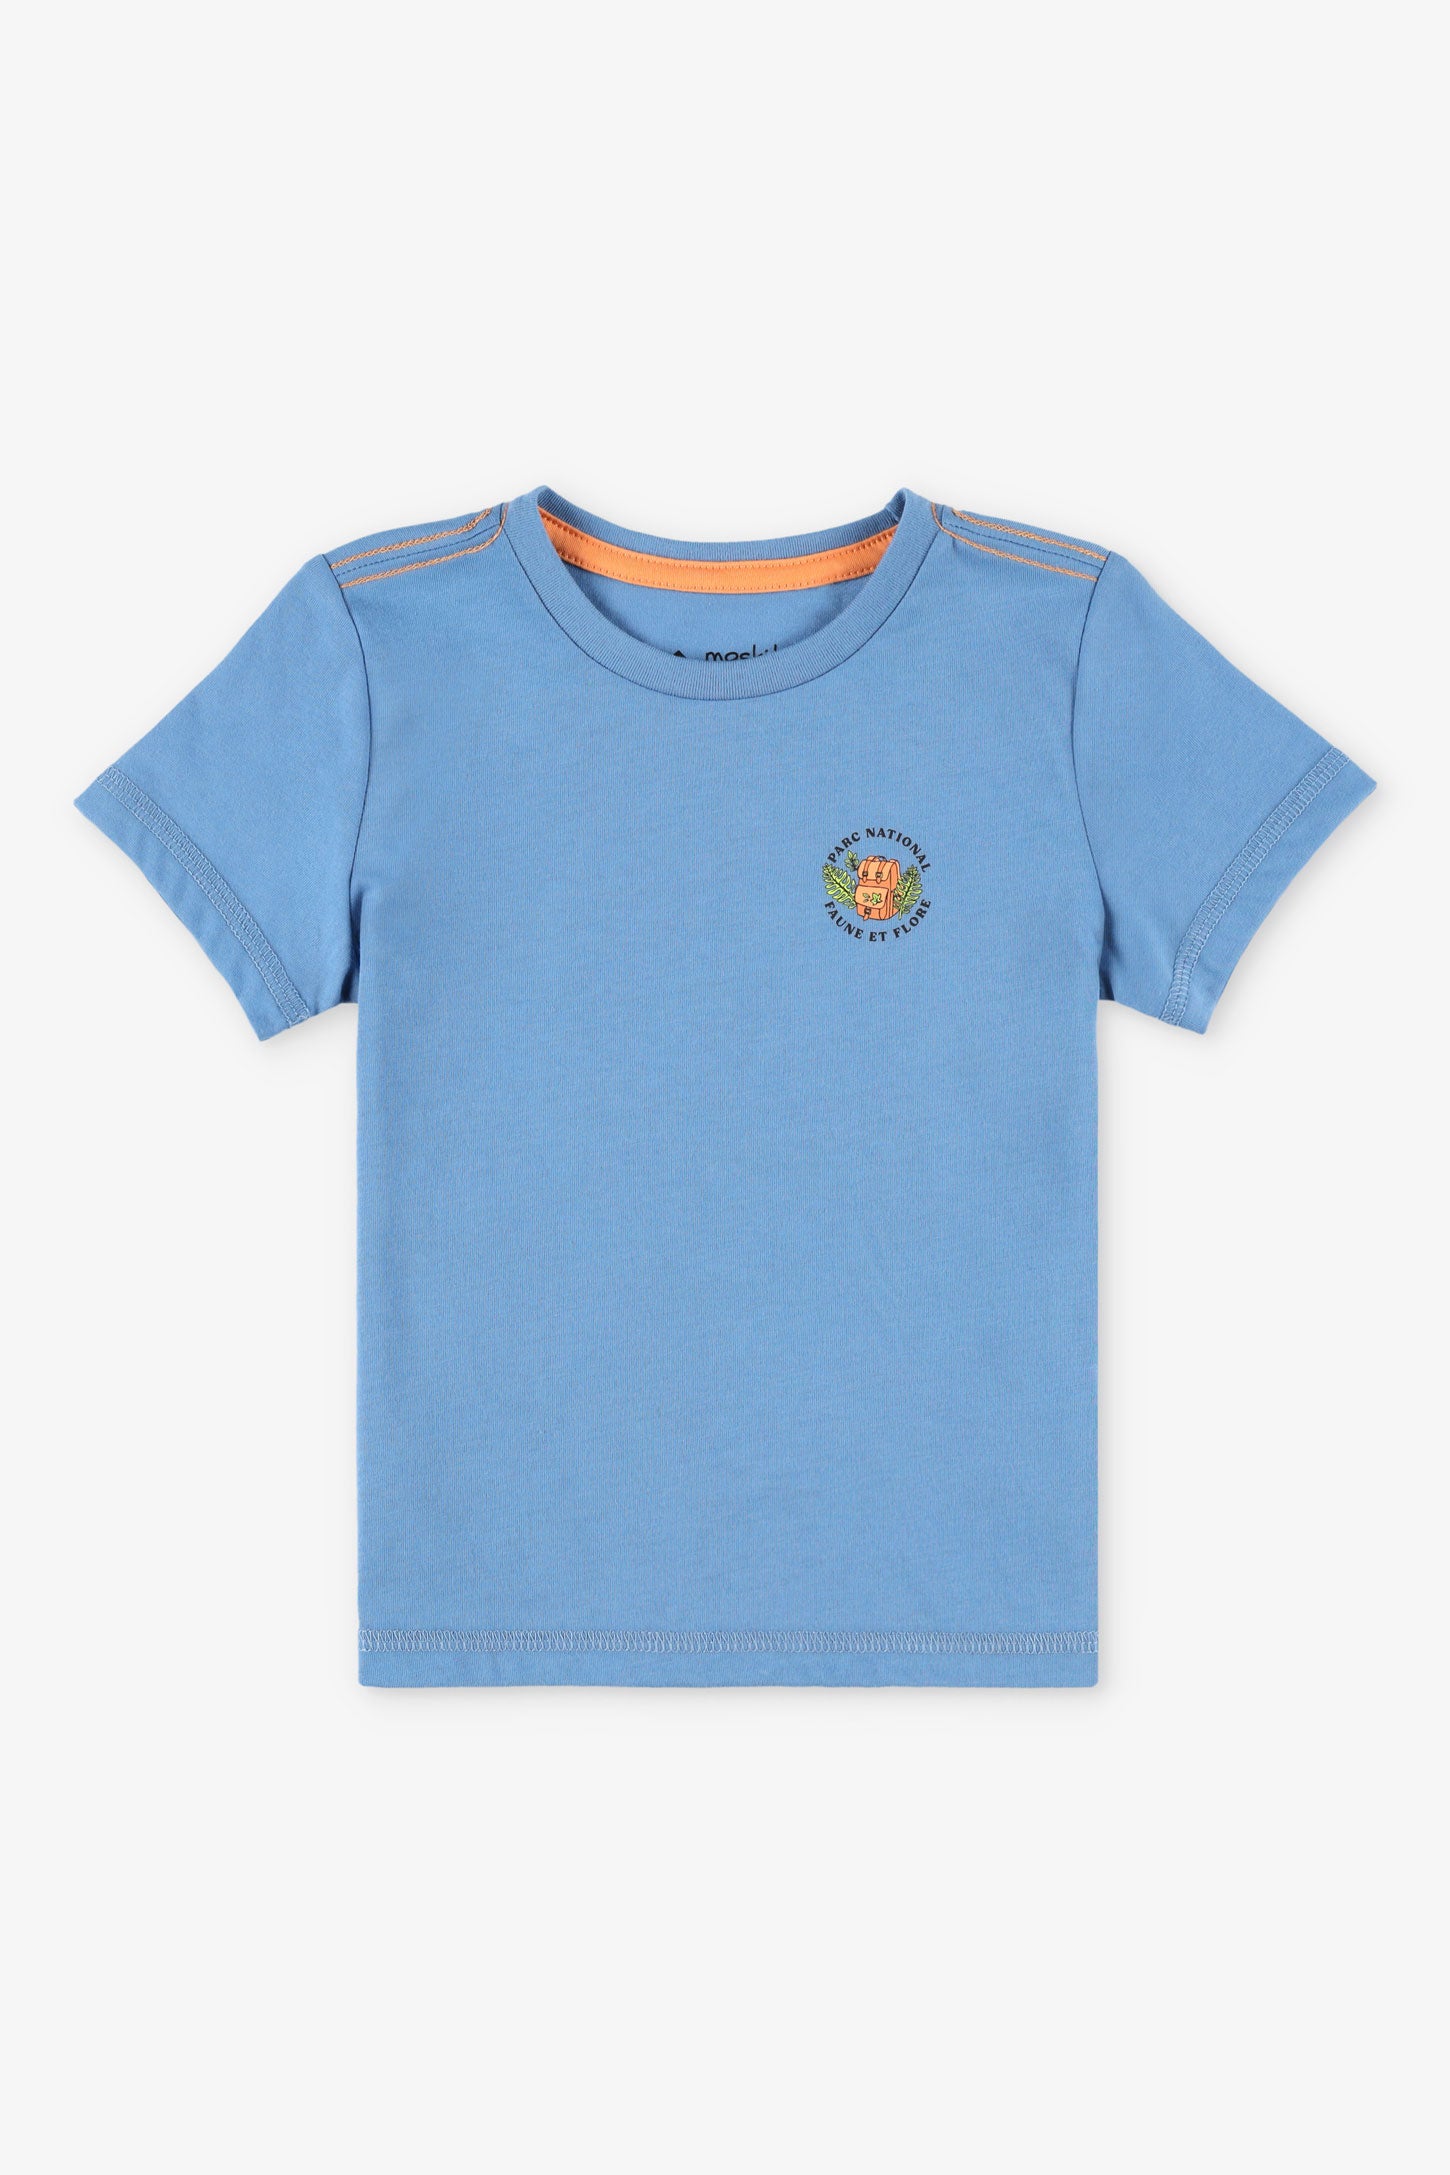 T-shirt col rond coton bio BM, 2T-3T, 2/25$ - Bébé garçon && BLEU